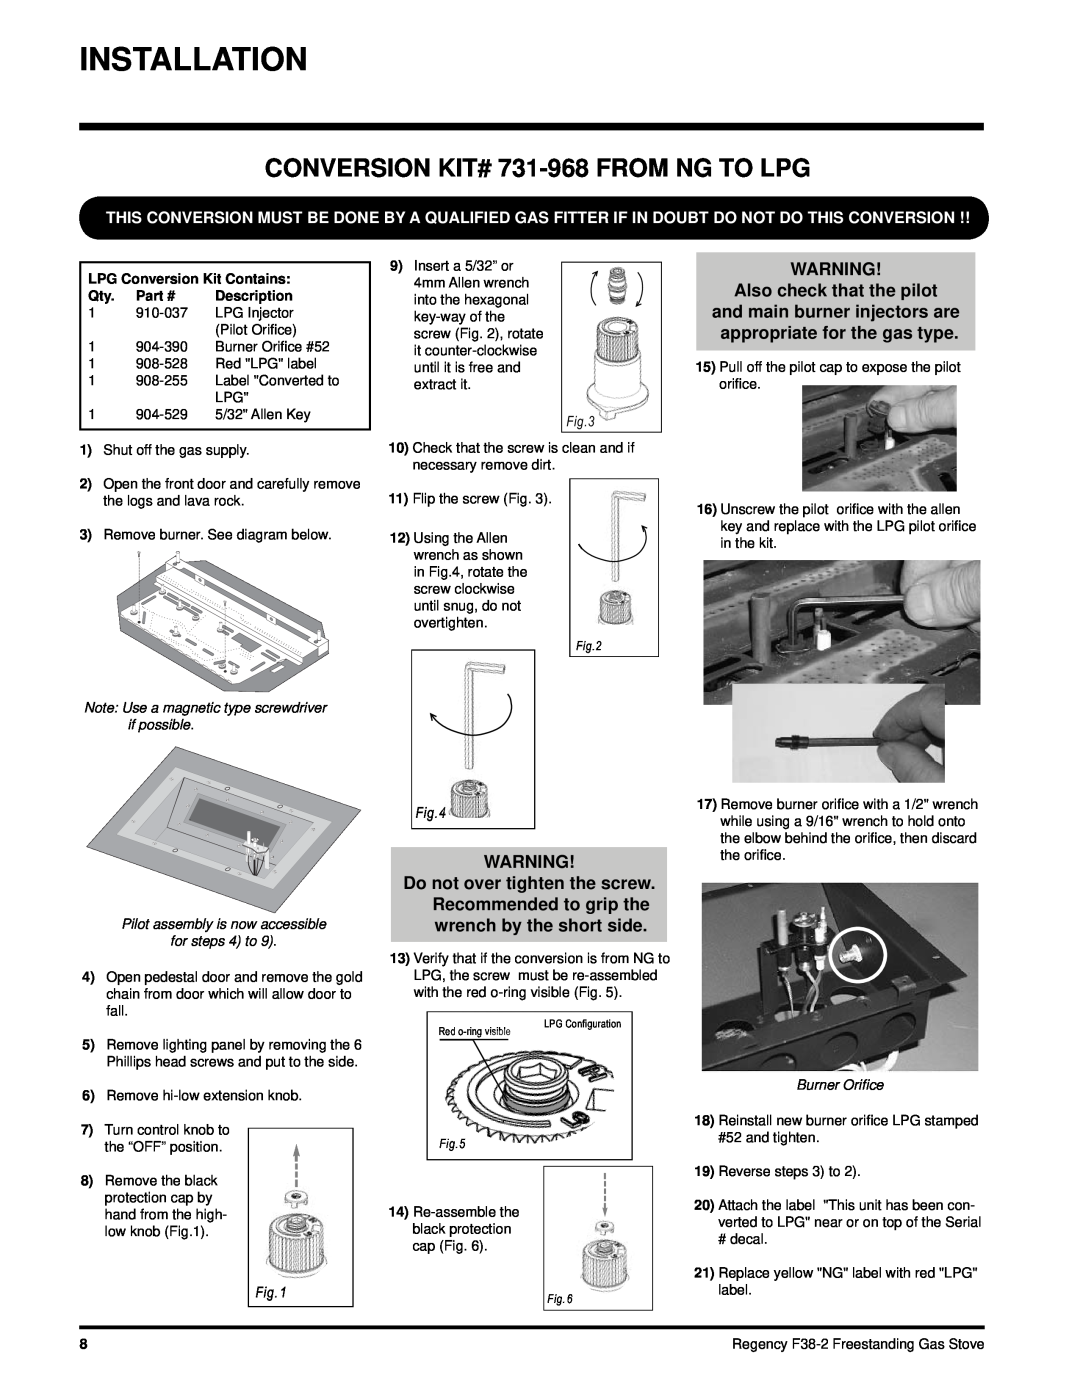 Regency F38-NG2, F38-LPG2 installation manual CONVERSION KIT# 731-968FROM NG TO LPG, Installation 